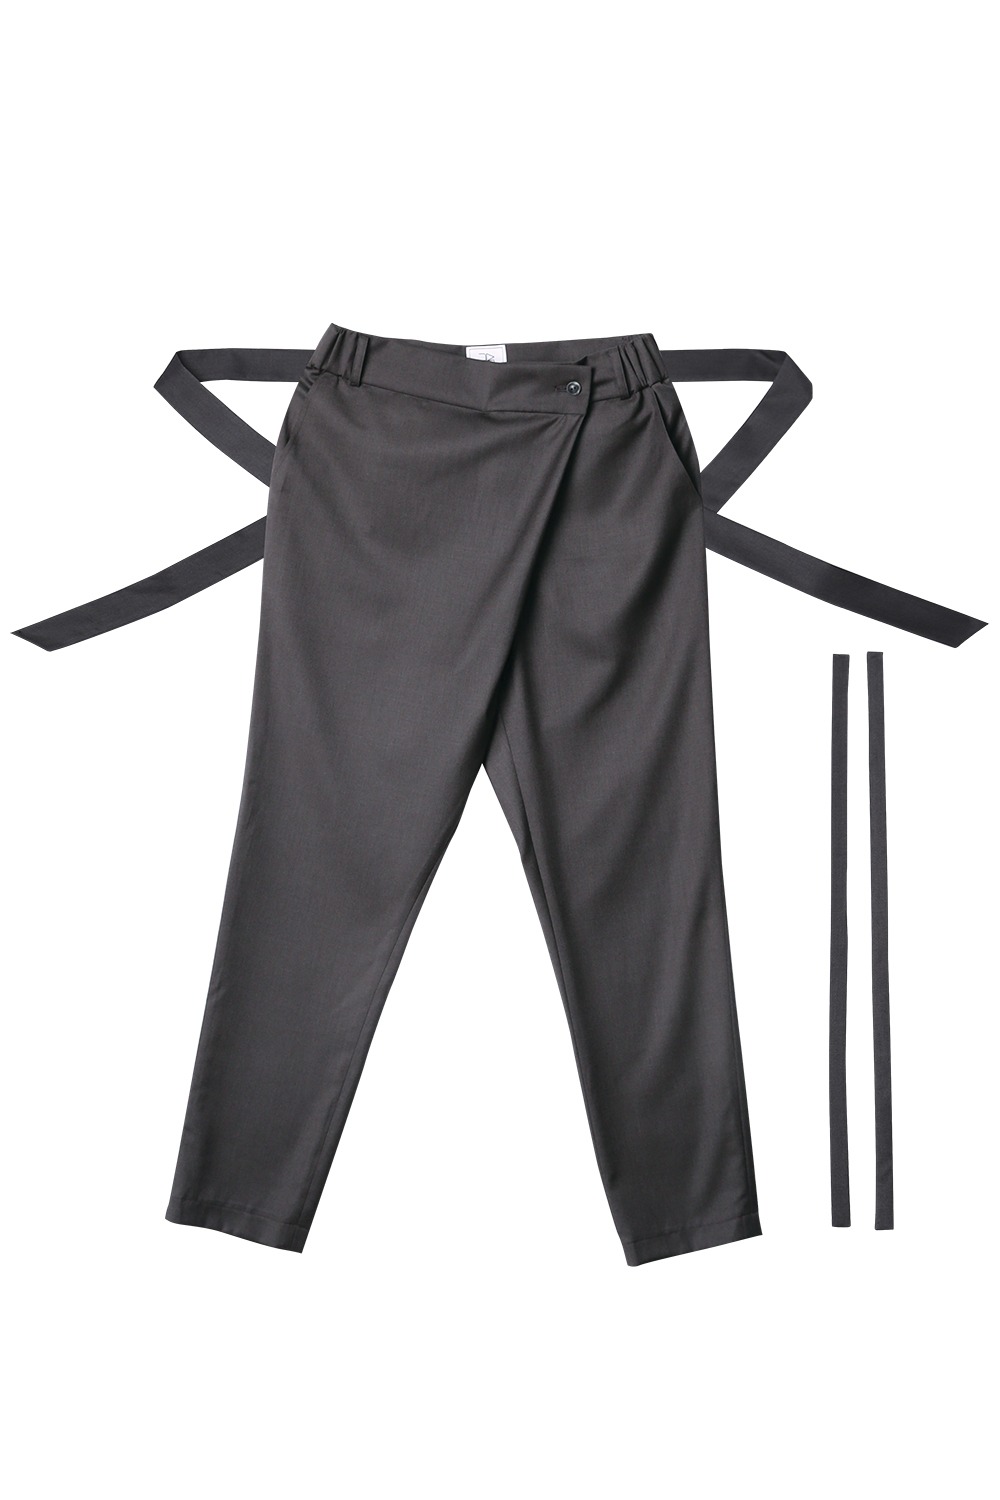 Sapok Slacks Hanbok Pants2 [Medium gray]